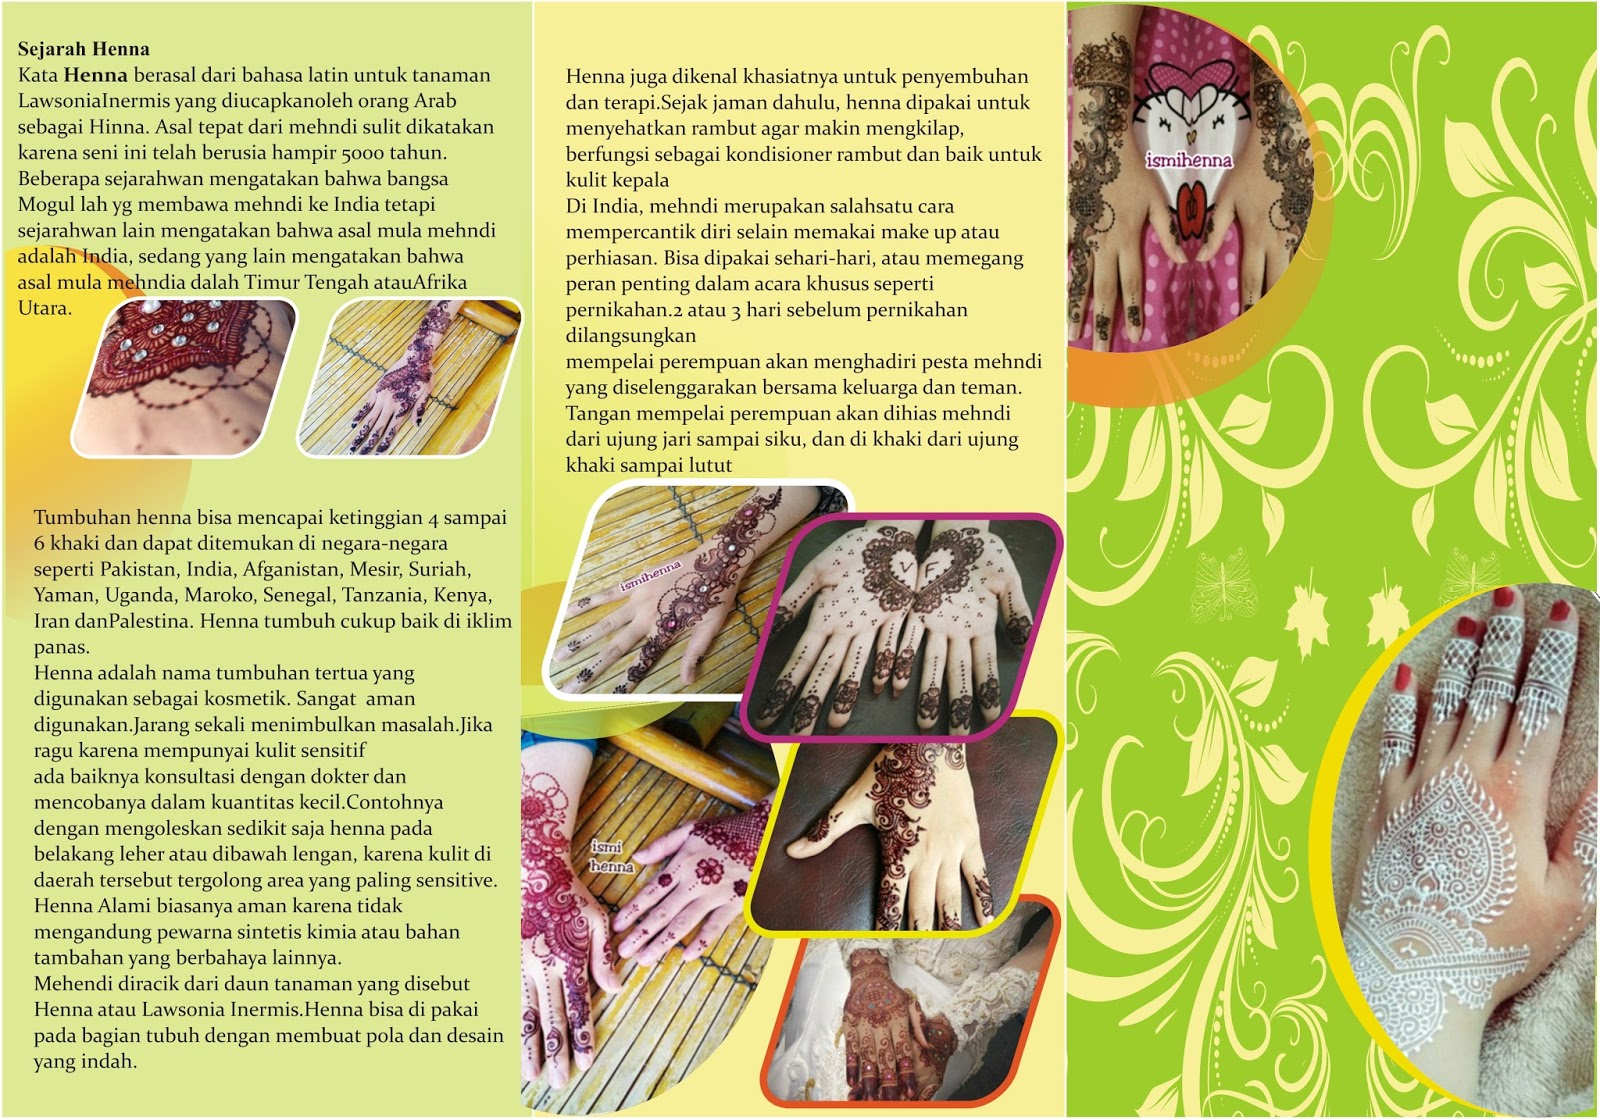  Desain  Brosur Henna  Blog desain  Bangjay